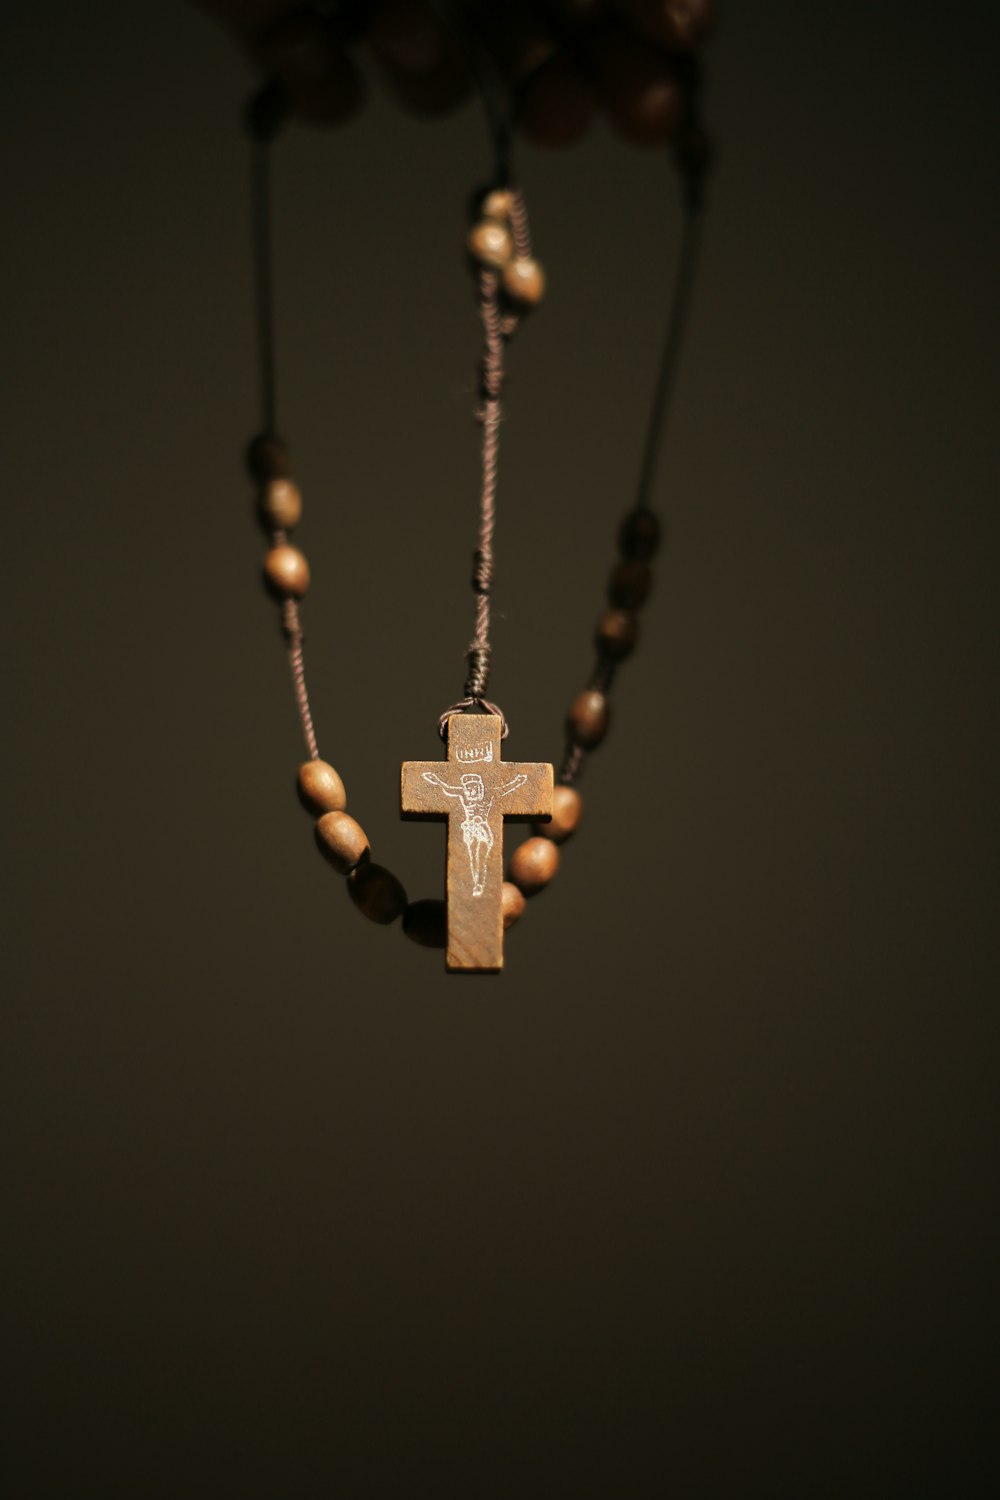 gold cross pendant necklace on black background